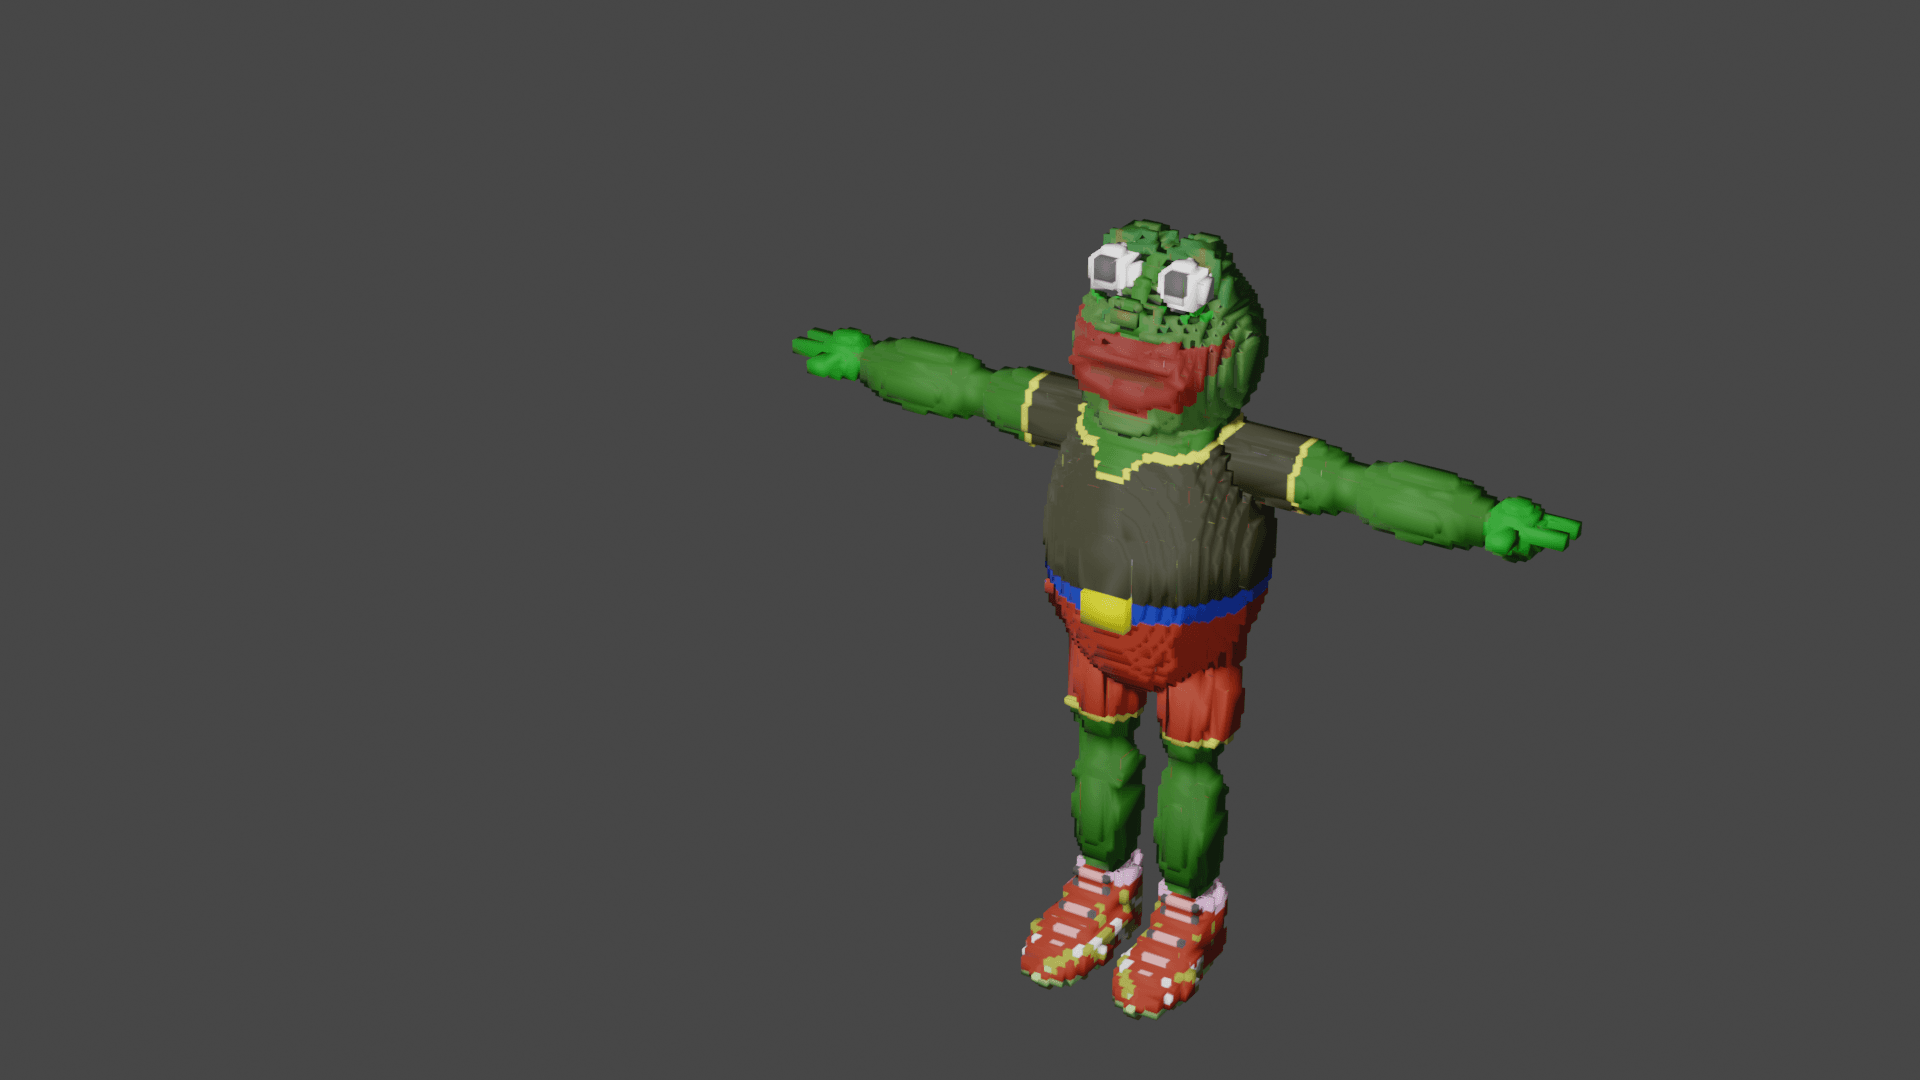 Pepe the Frog (Metaverse Avatar)